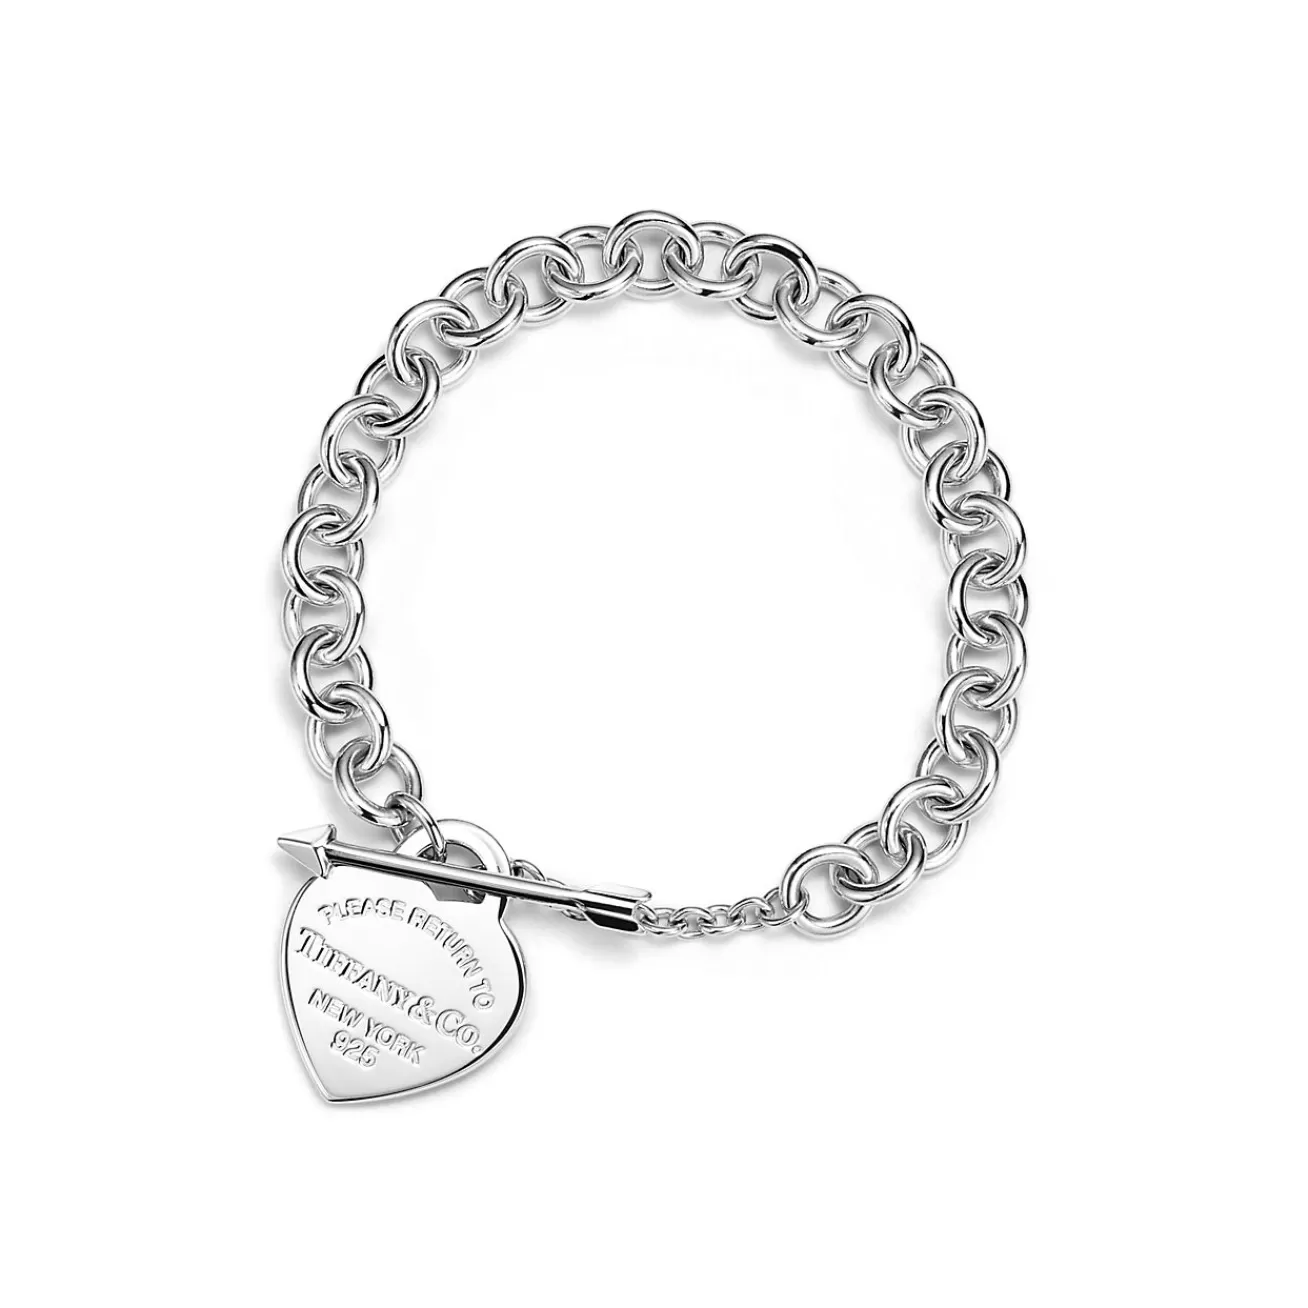 Tiffany & Co. Return to Tiffany® Lovestruck Heart Tag Bracelet in Silver, Medium | ^ Bracelets | Gifts for Her